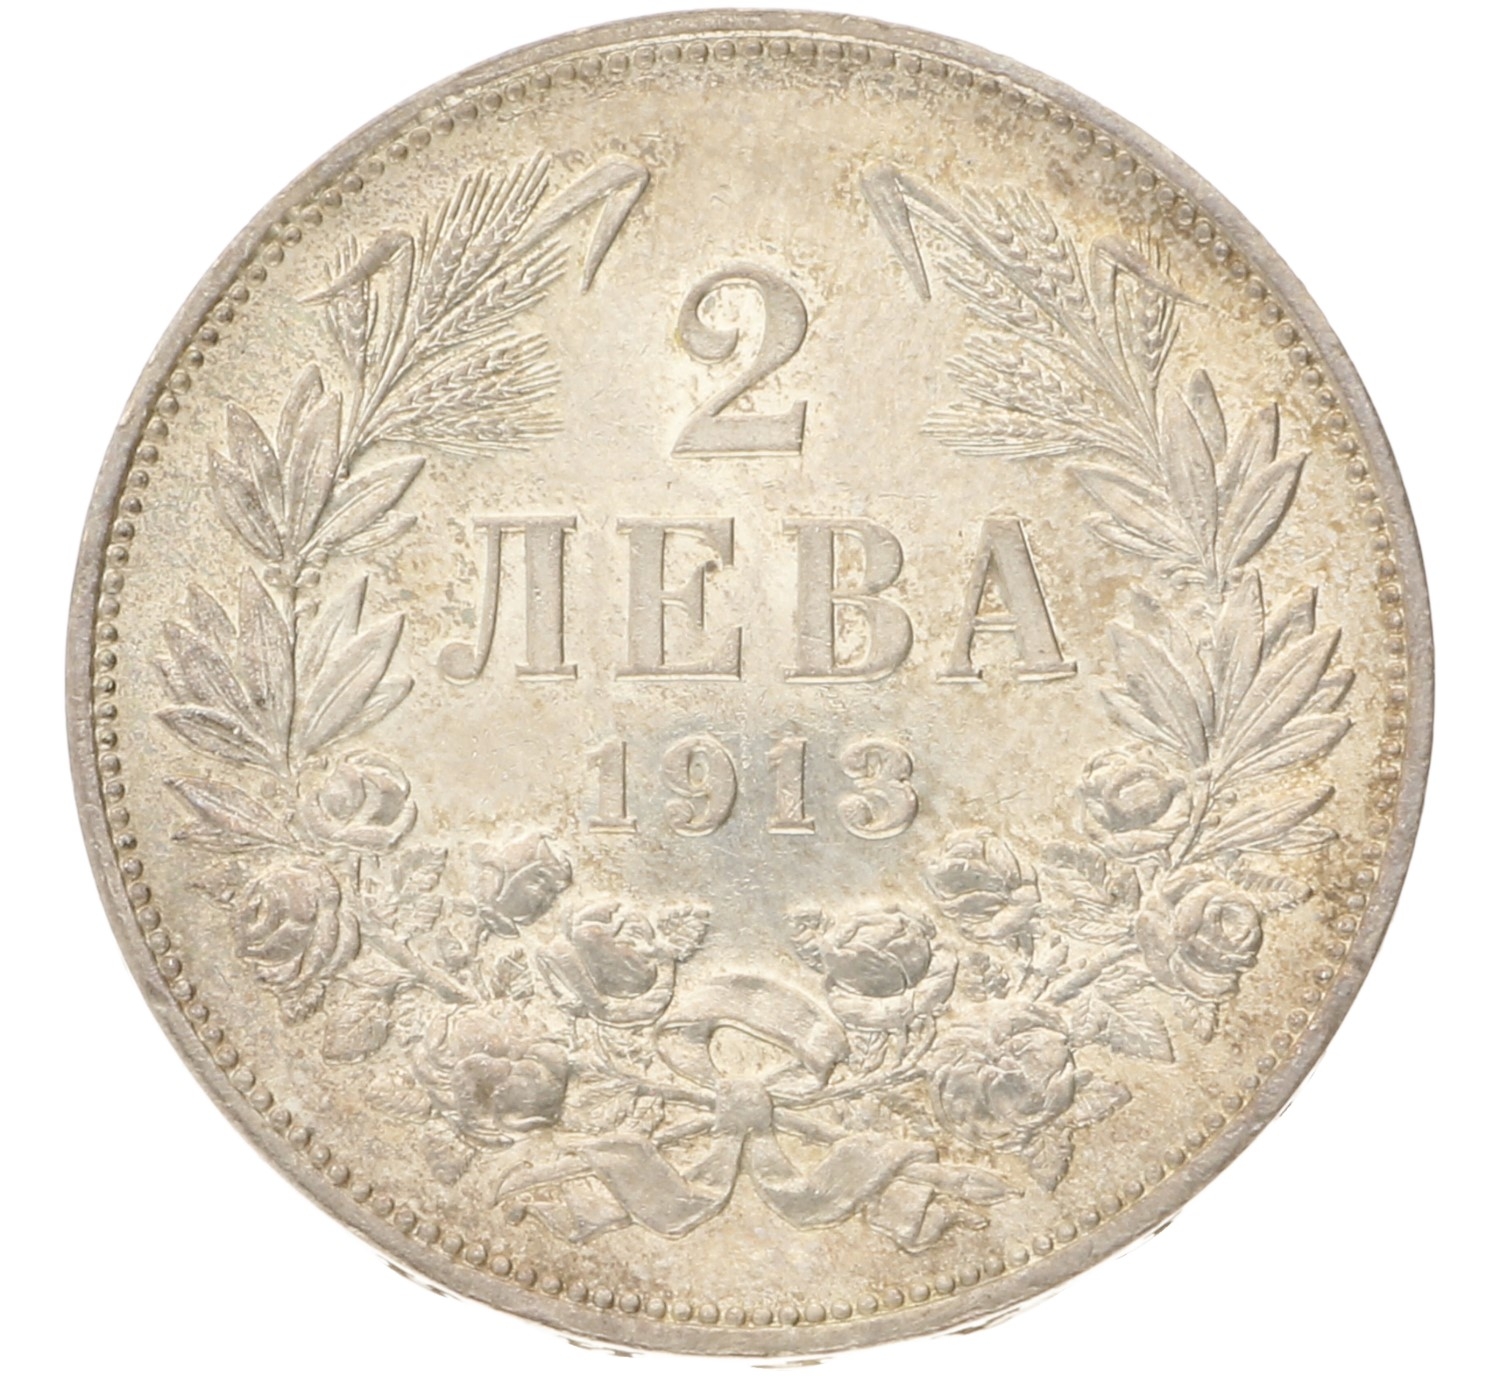 2 Leva - Bulgaria - 1913